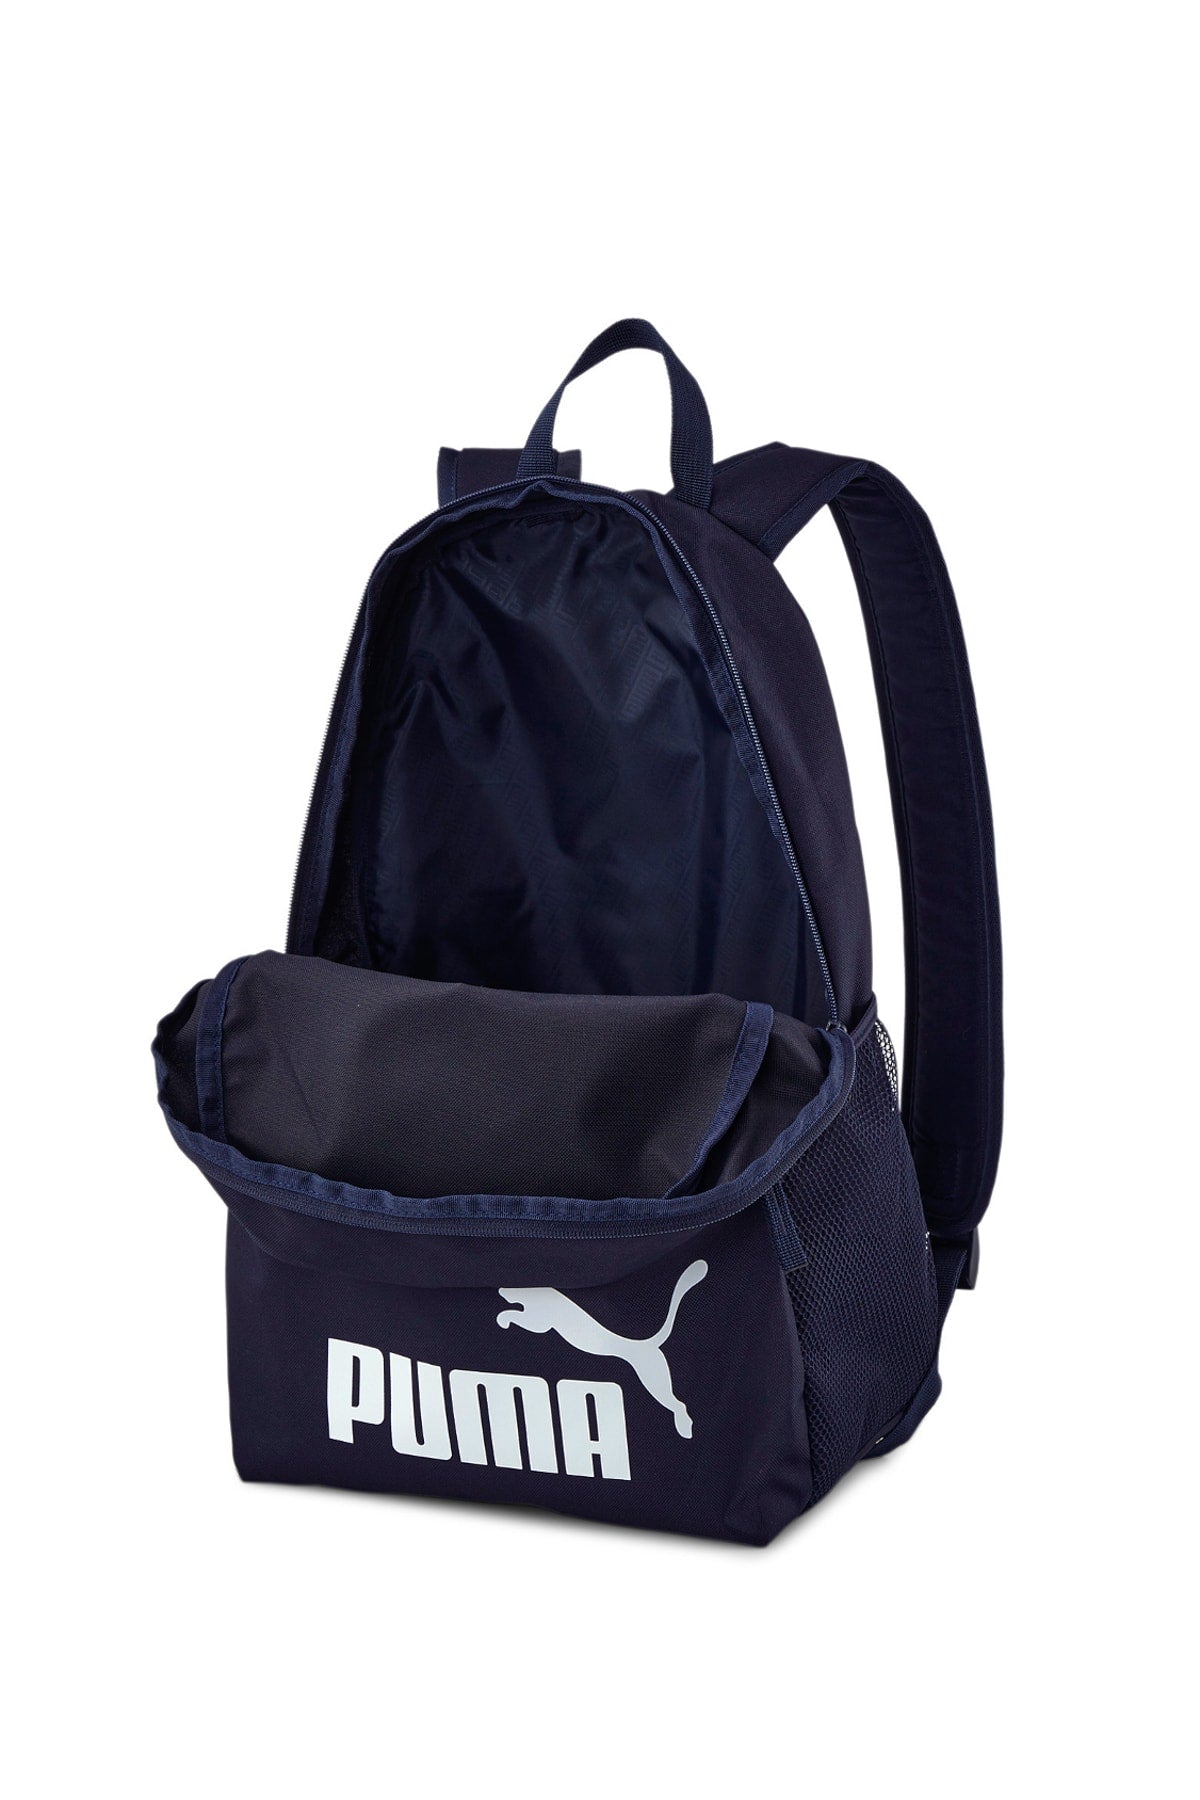 Phase Backpack - Unisex Navy Blue Backpack 44x30x14